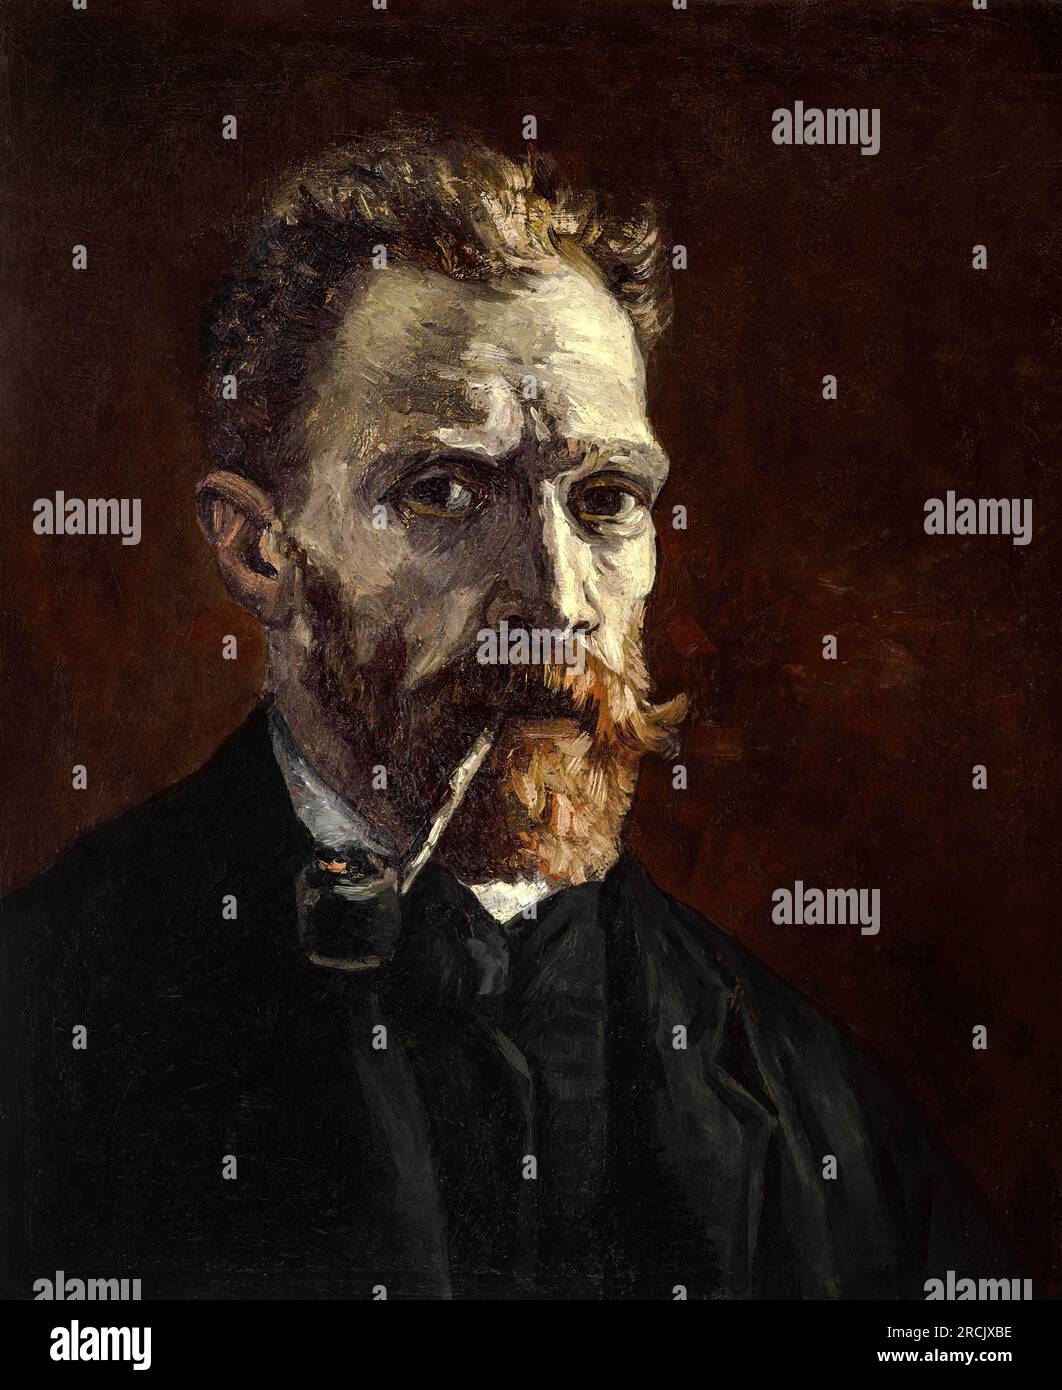 Autorretrato de Vincent van Gogh con la famosa pintura Pipe. Original de Wikimedia Commons. Foto de stock